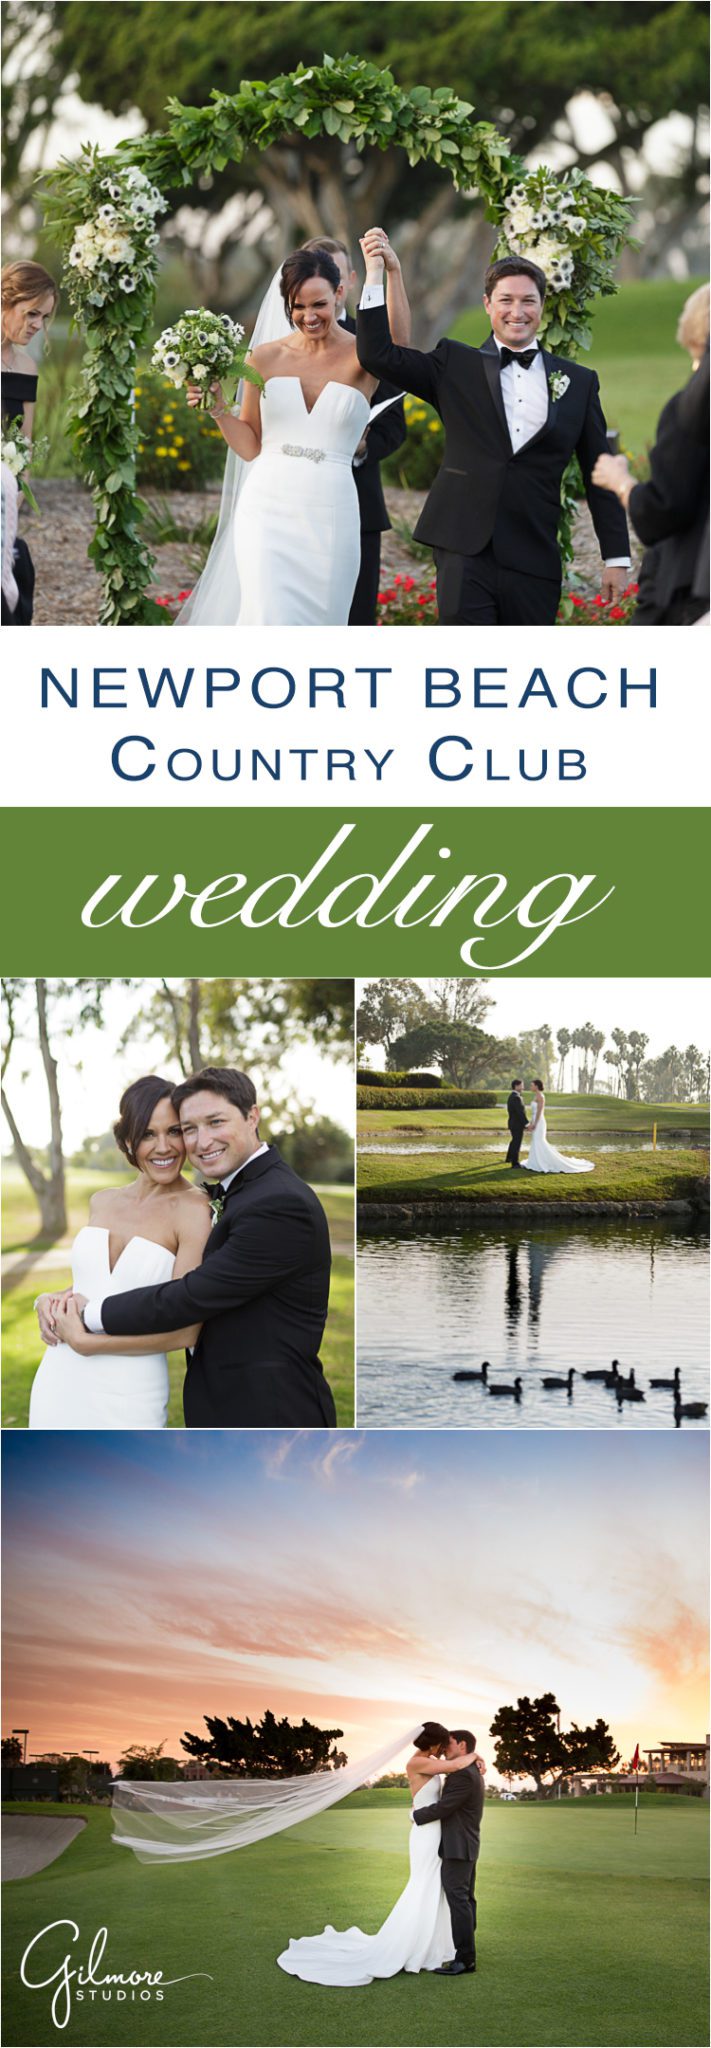 Newport Beach Country Club wedding photographer